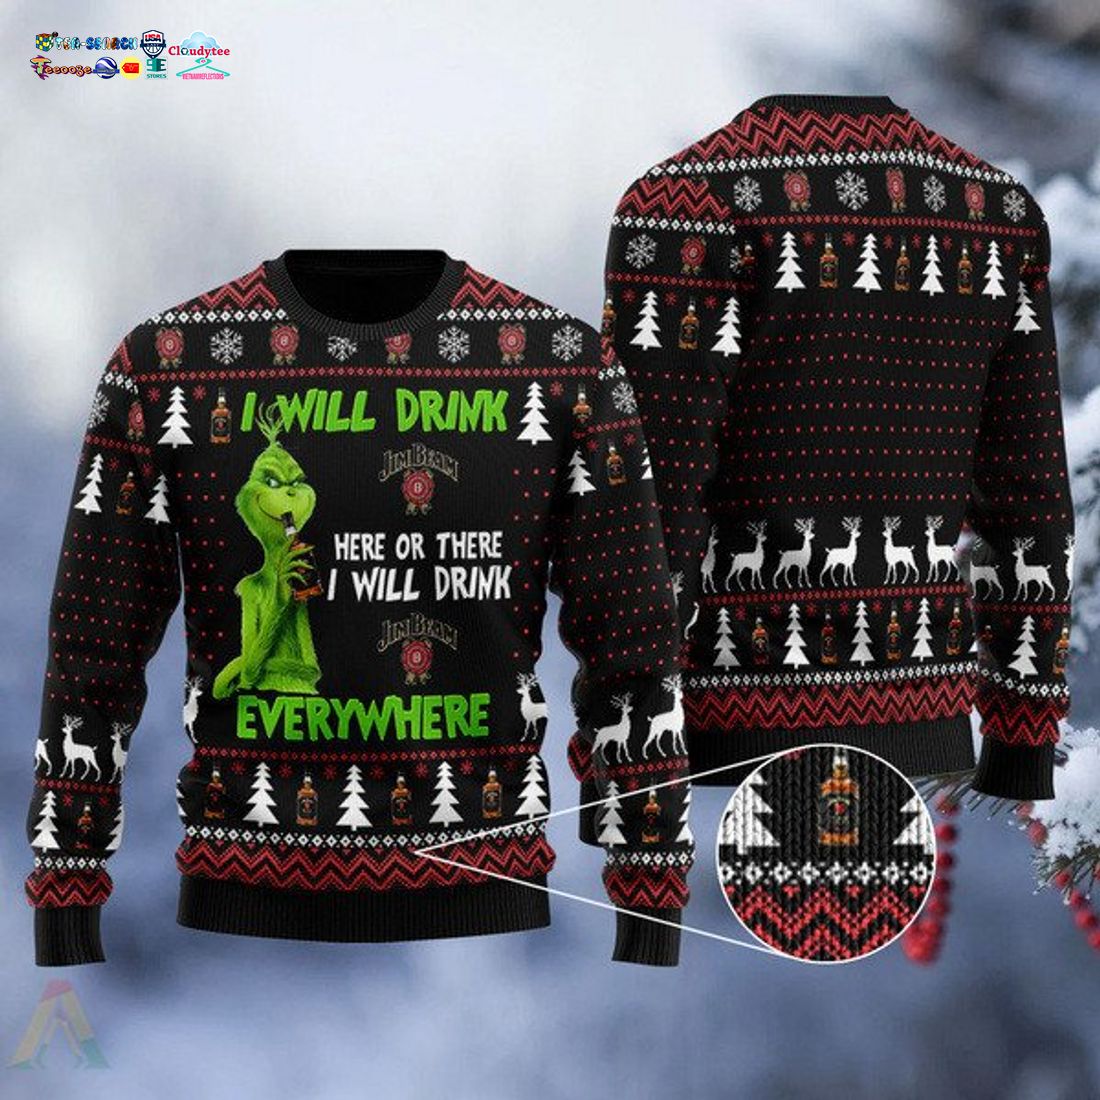 grinch-i-will-drink-jim-beam-everywhere-ugly-christmas-sweater-1-lXBYR.jpg